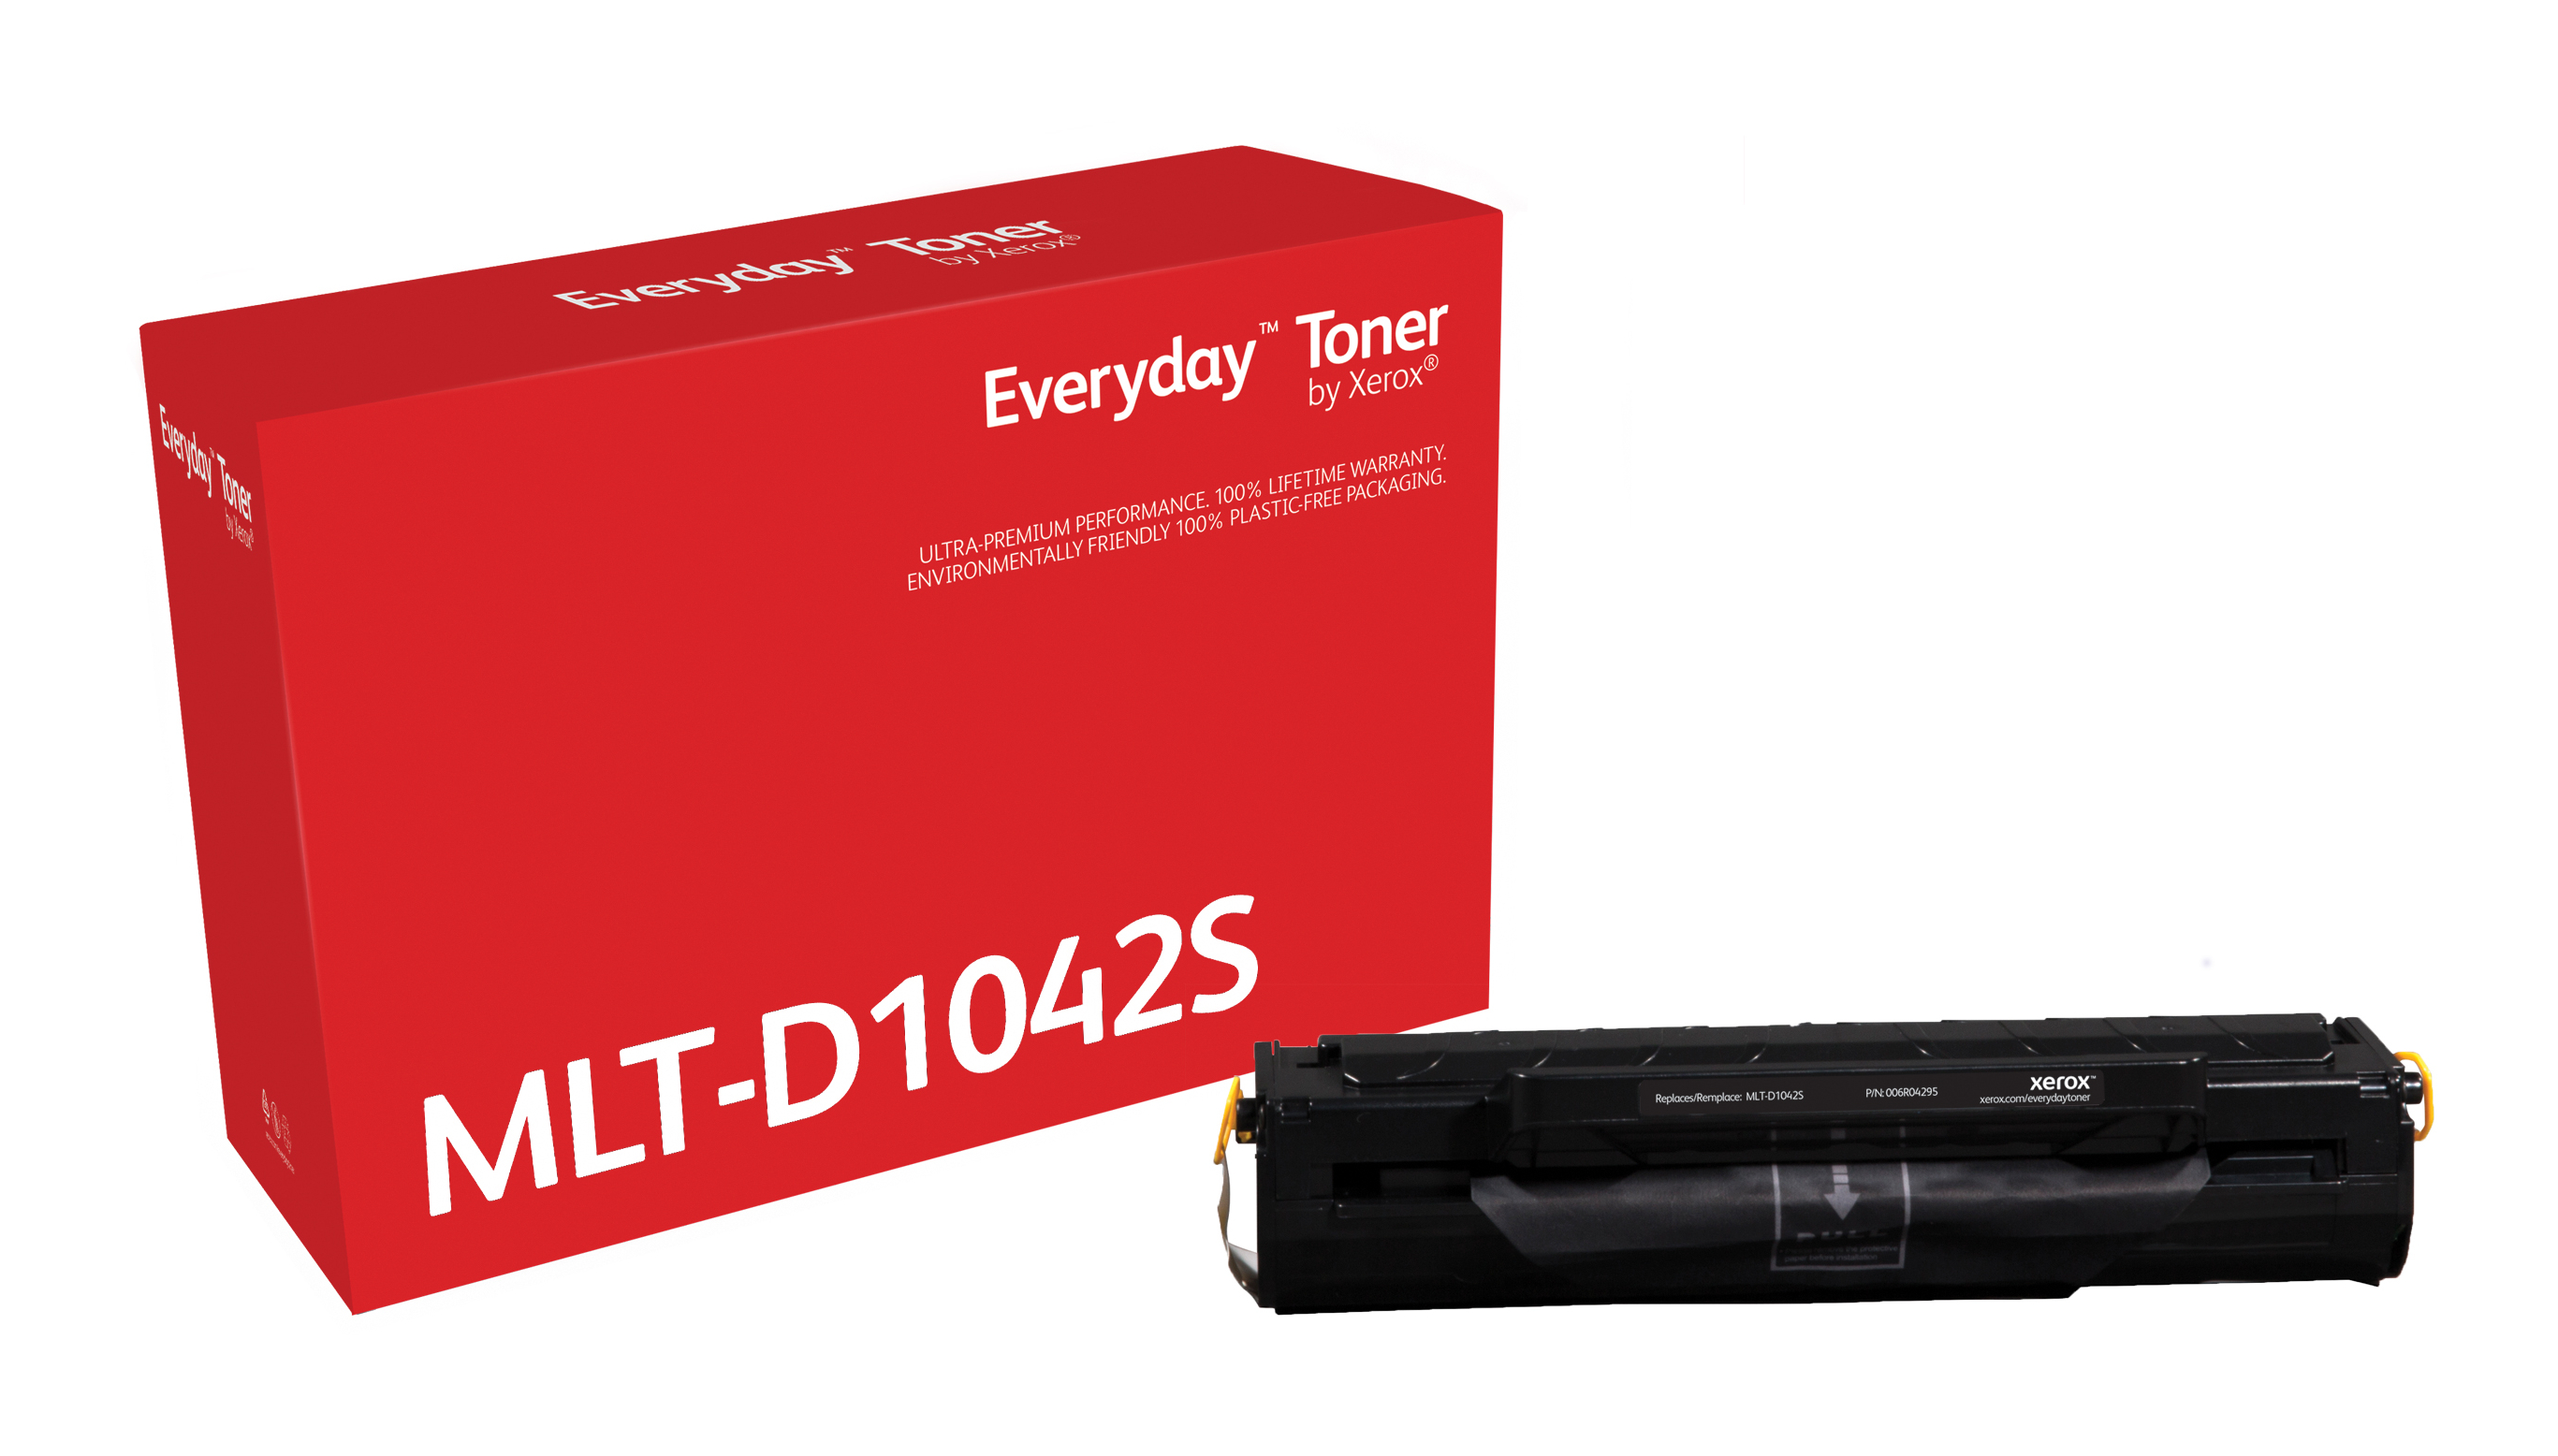 Toner Everyday Noir compatible avec Samsung MLT-D1042S, Capacité standard  006R04295 by Xerox